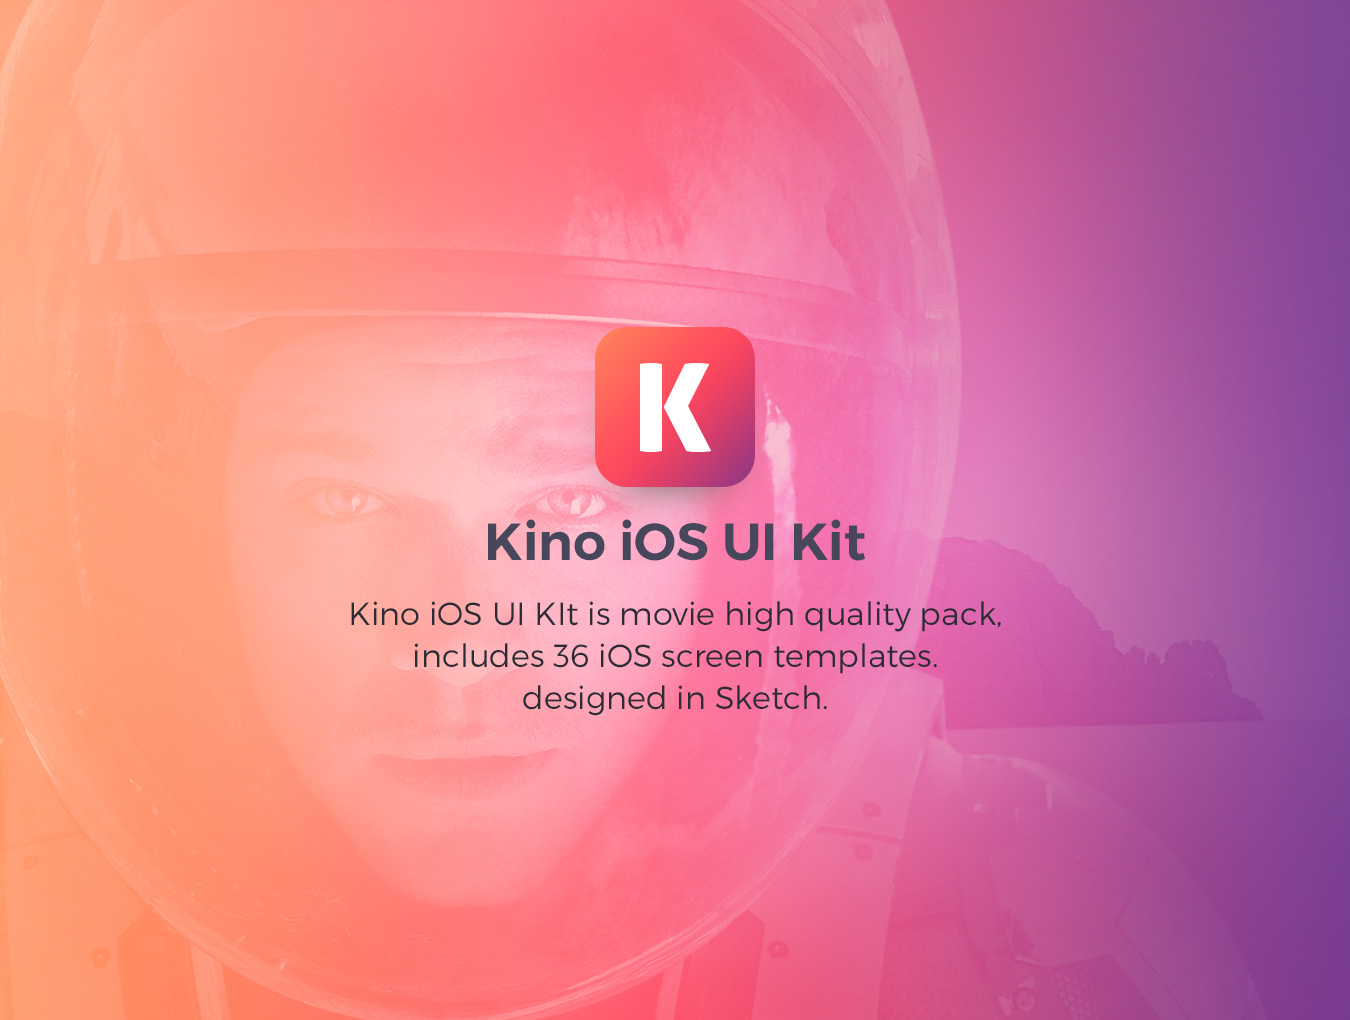 kino_ios_ui_kit-detail-images-01_1517820181497